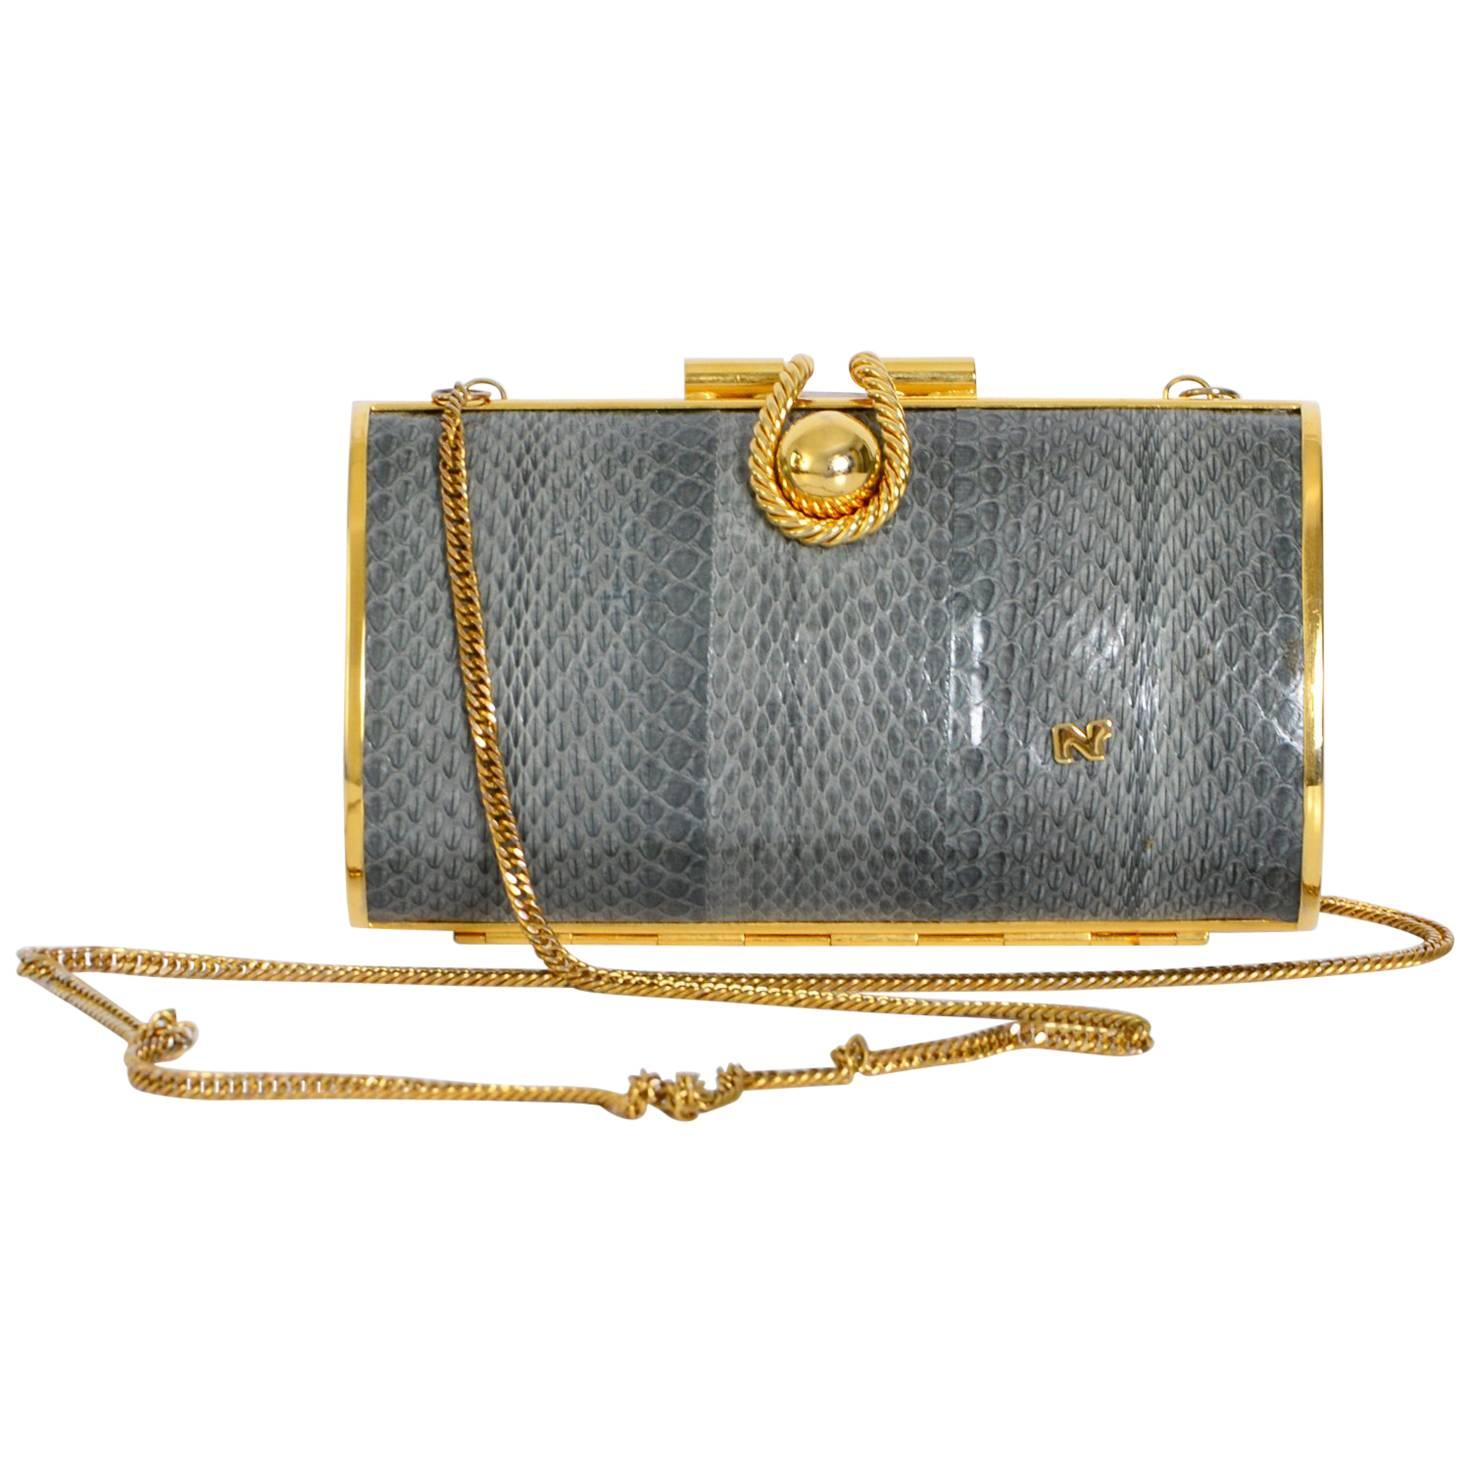 Nina Ricci vintage 1970s gold & grey snake skin clutch minaudiere 